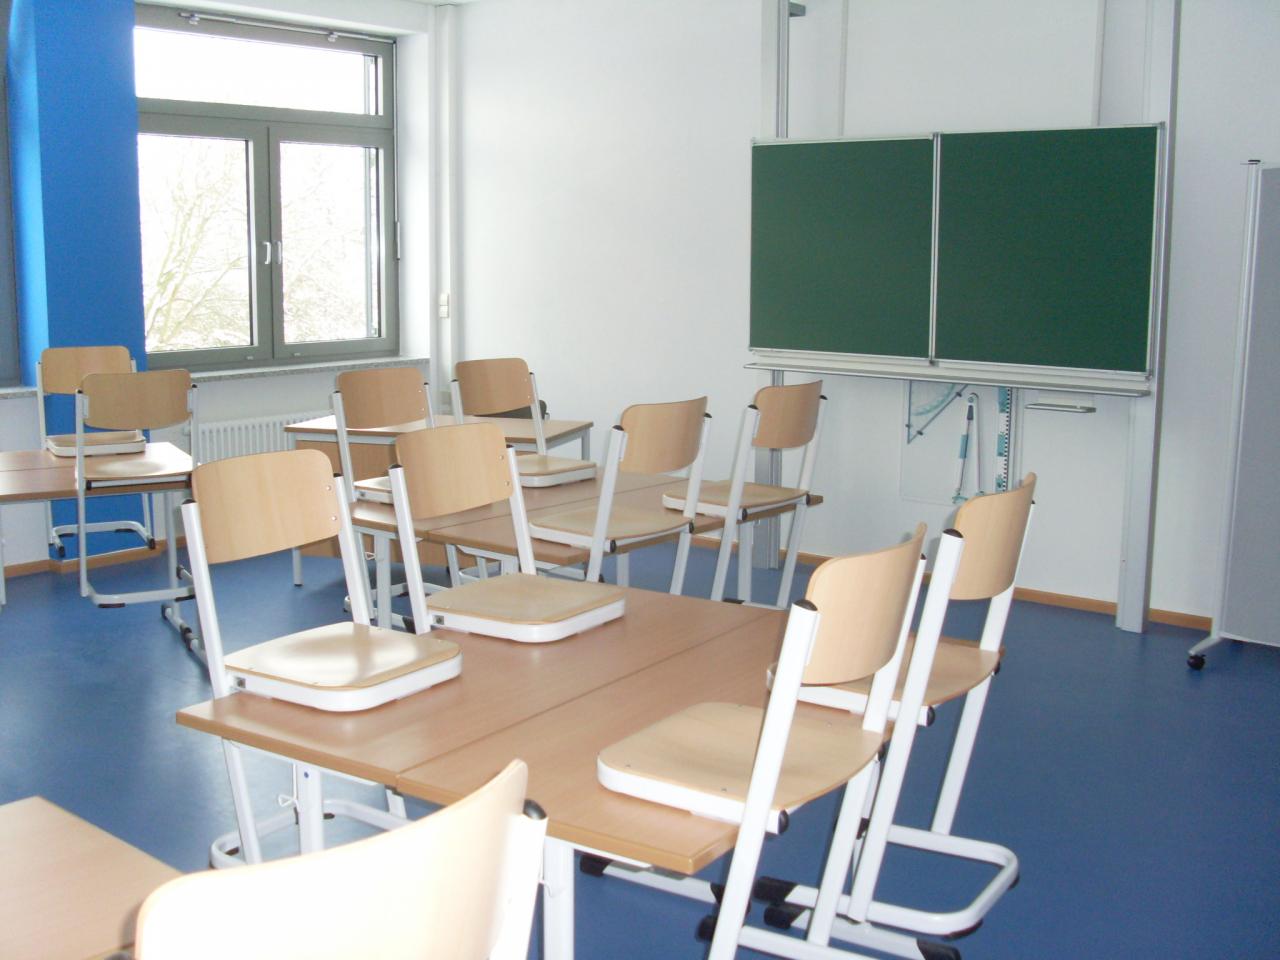 06_Klassenraum.jpg